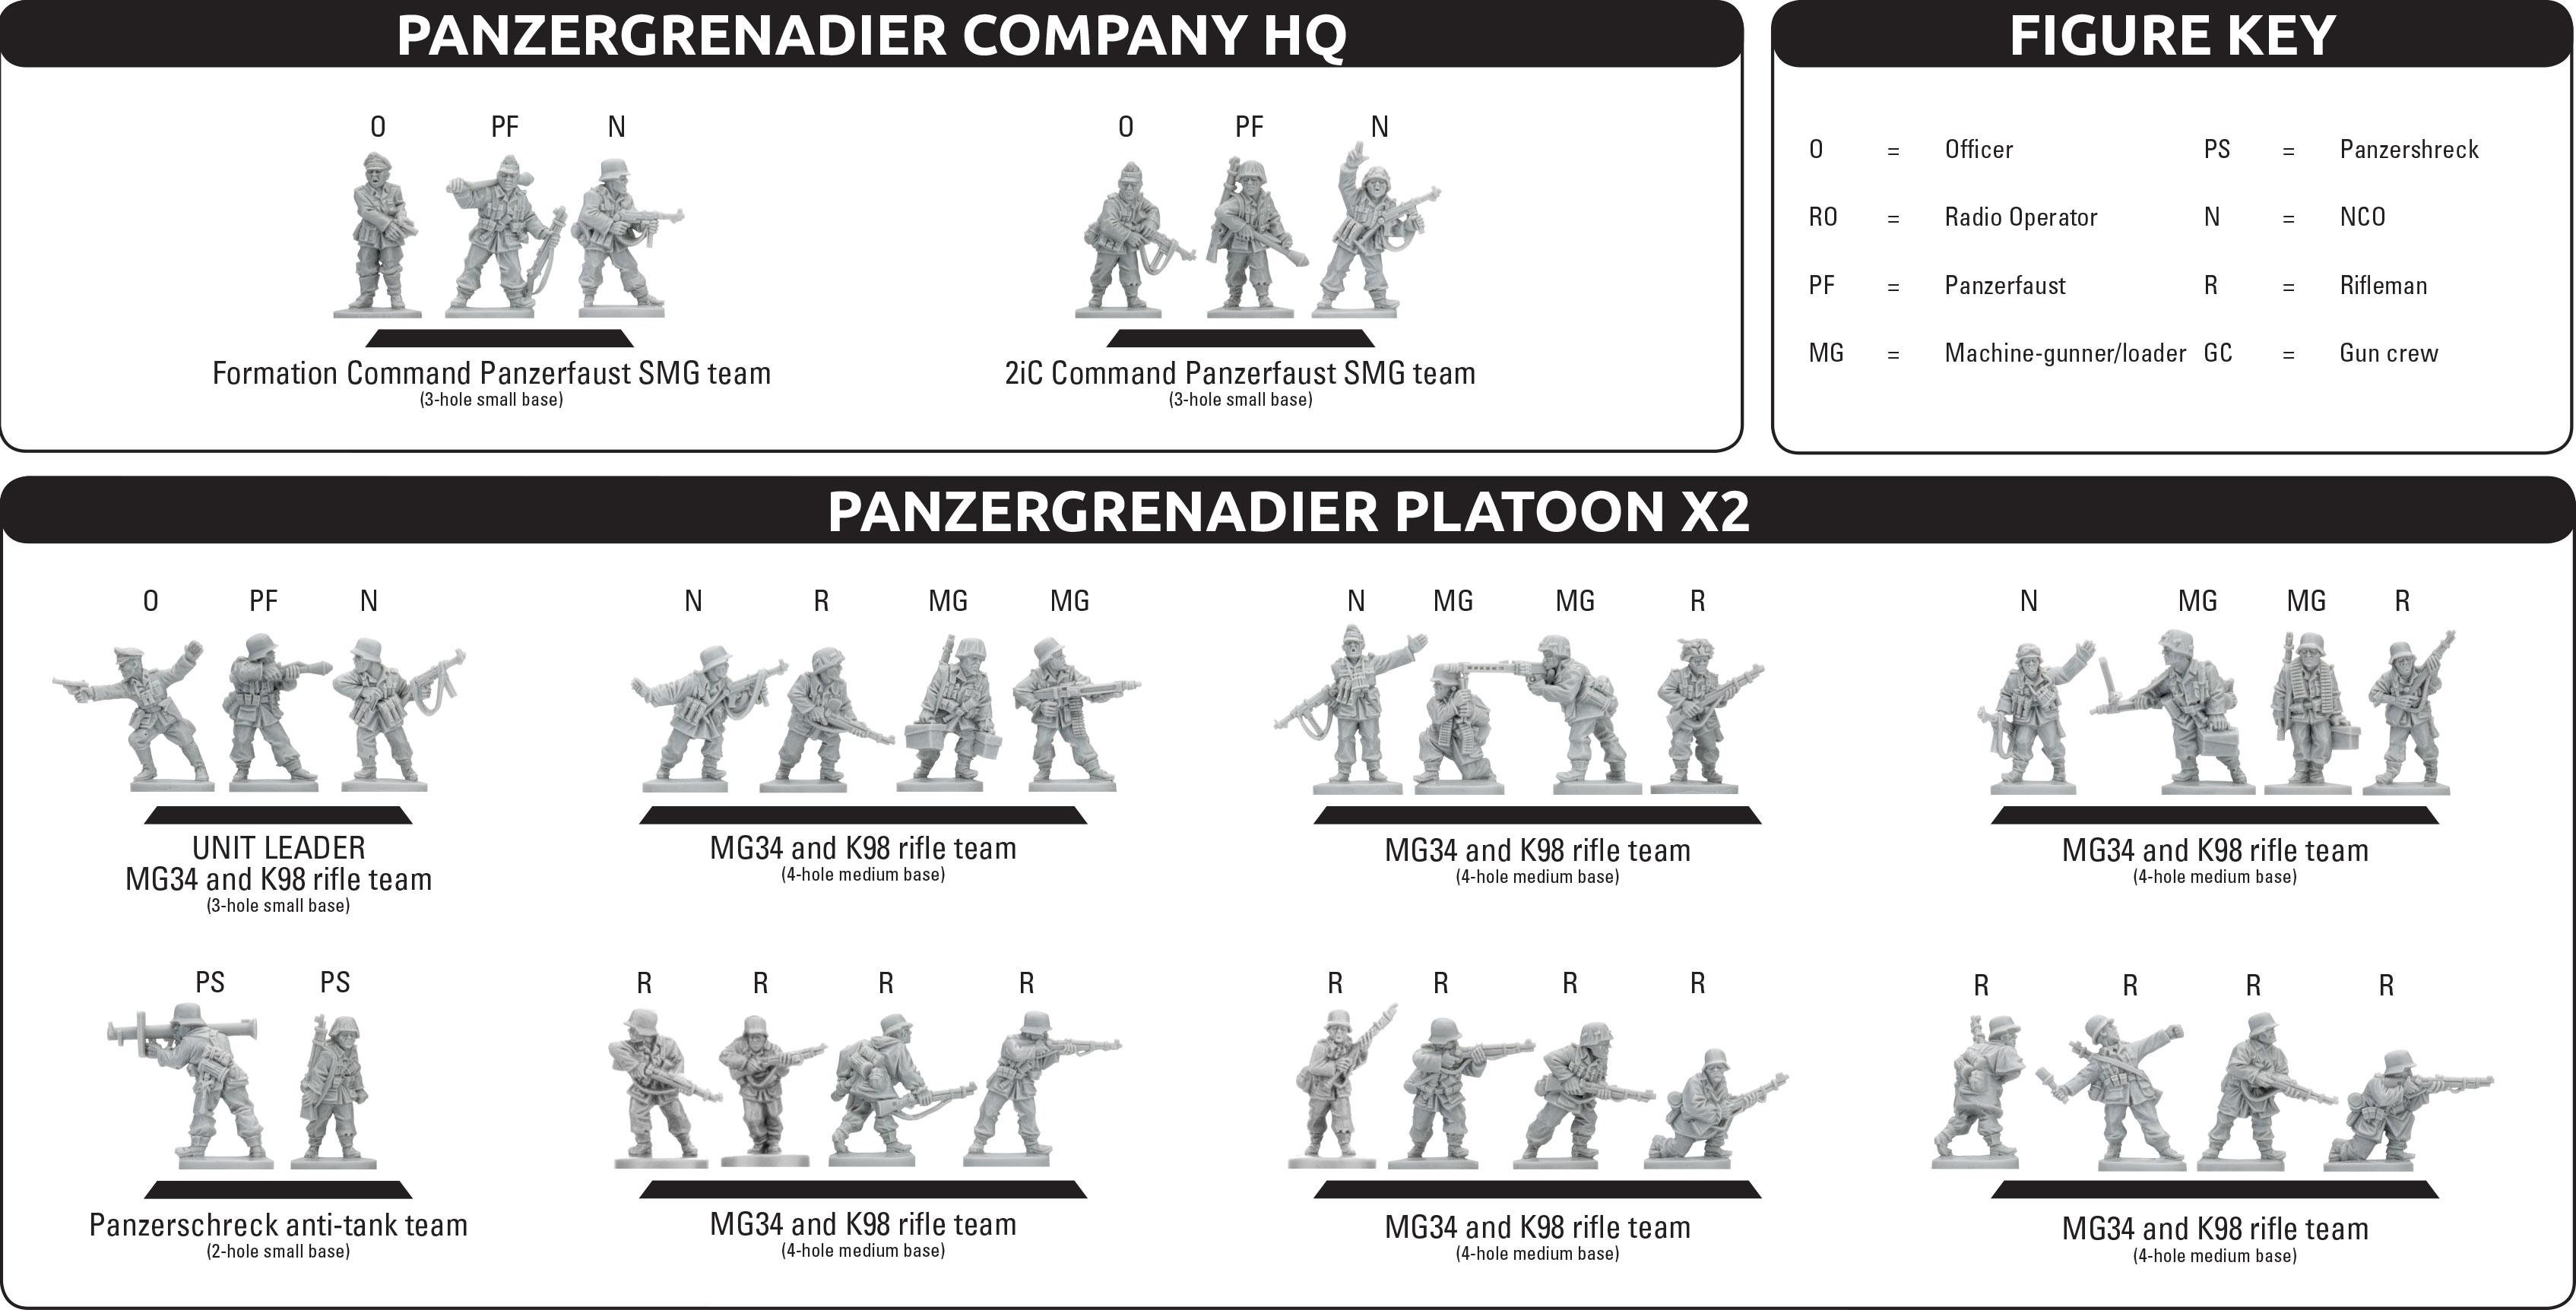 Assembling the Panzergrenadiers